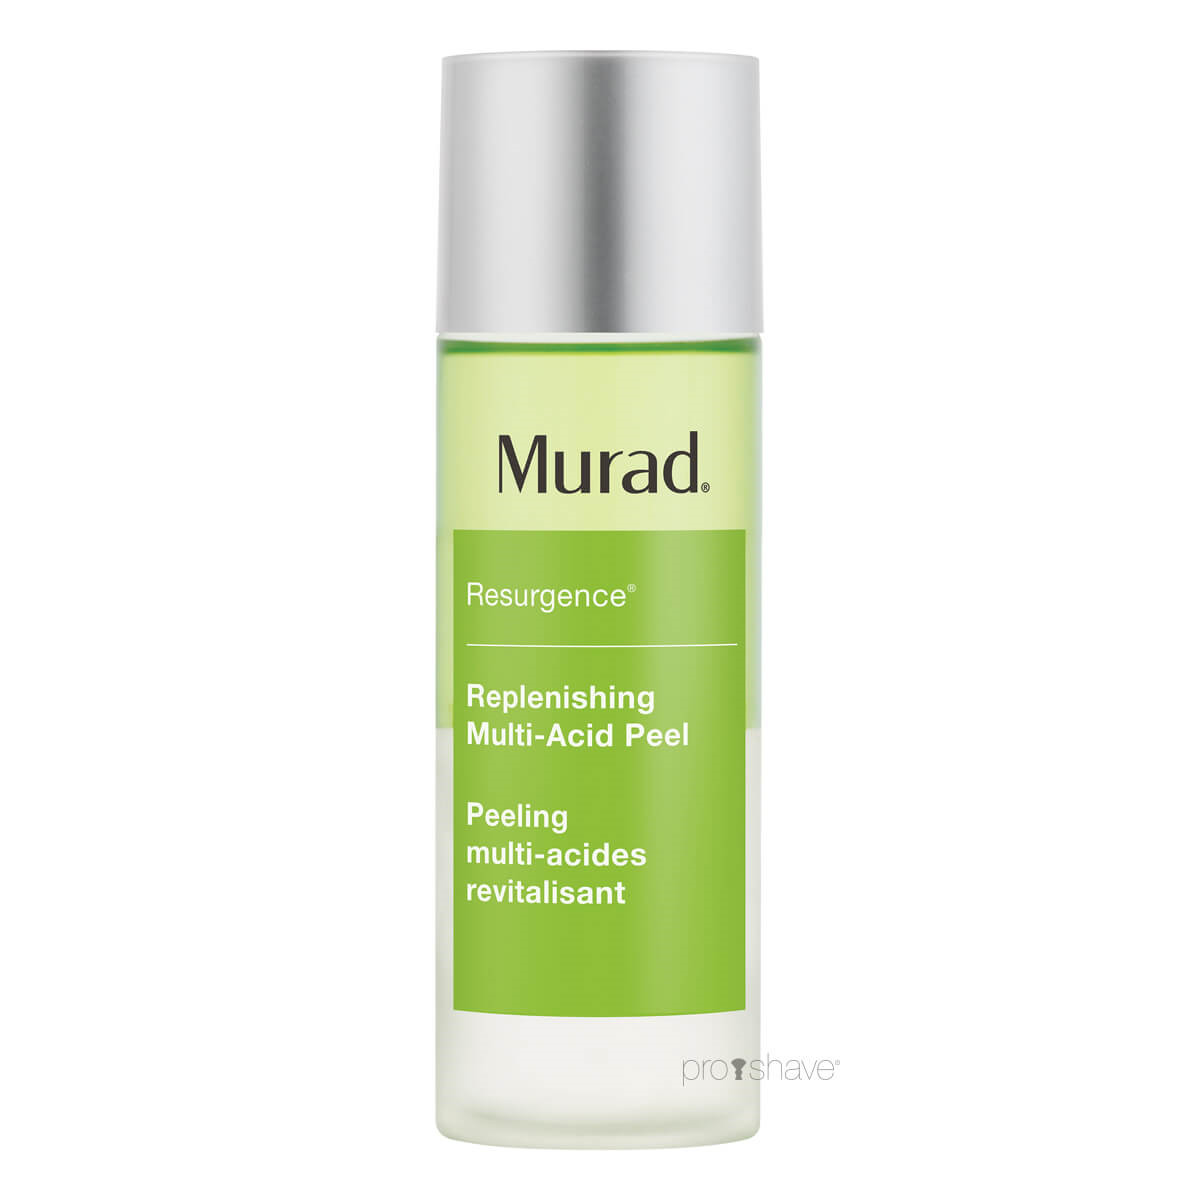 Se Murad Replenishing Multi Acid Peel, Resurgence, 100 ml. hos Proshave